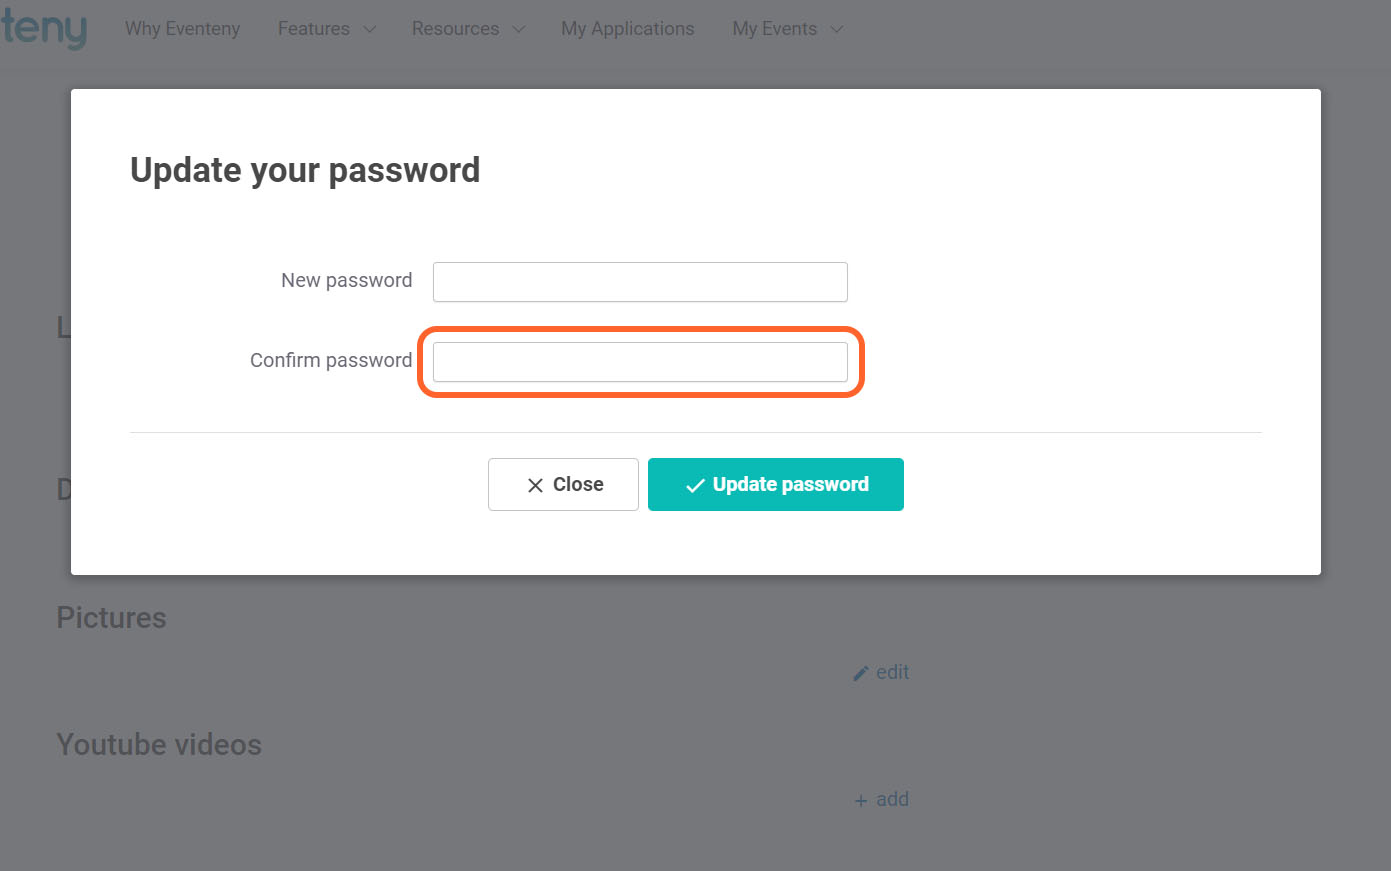 Confirm new password field